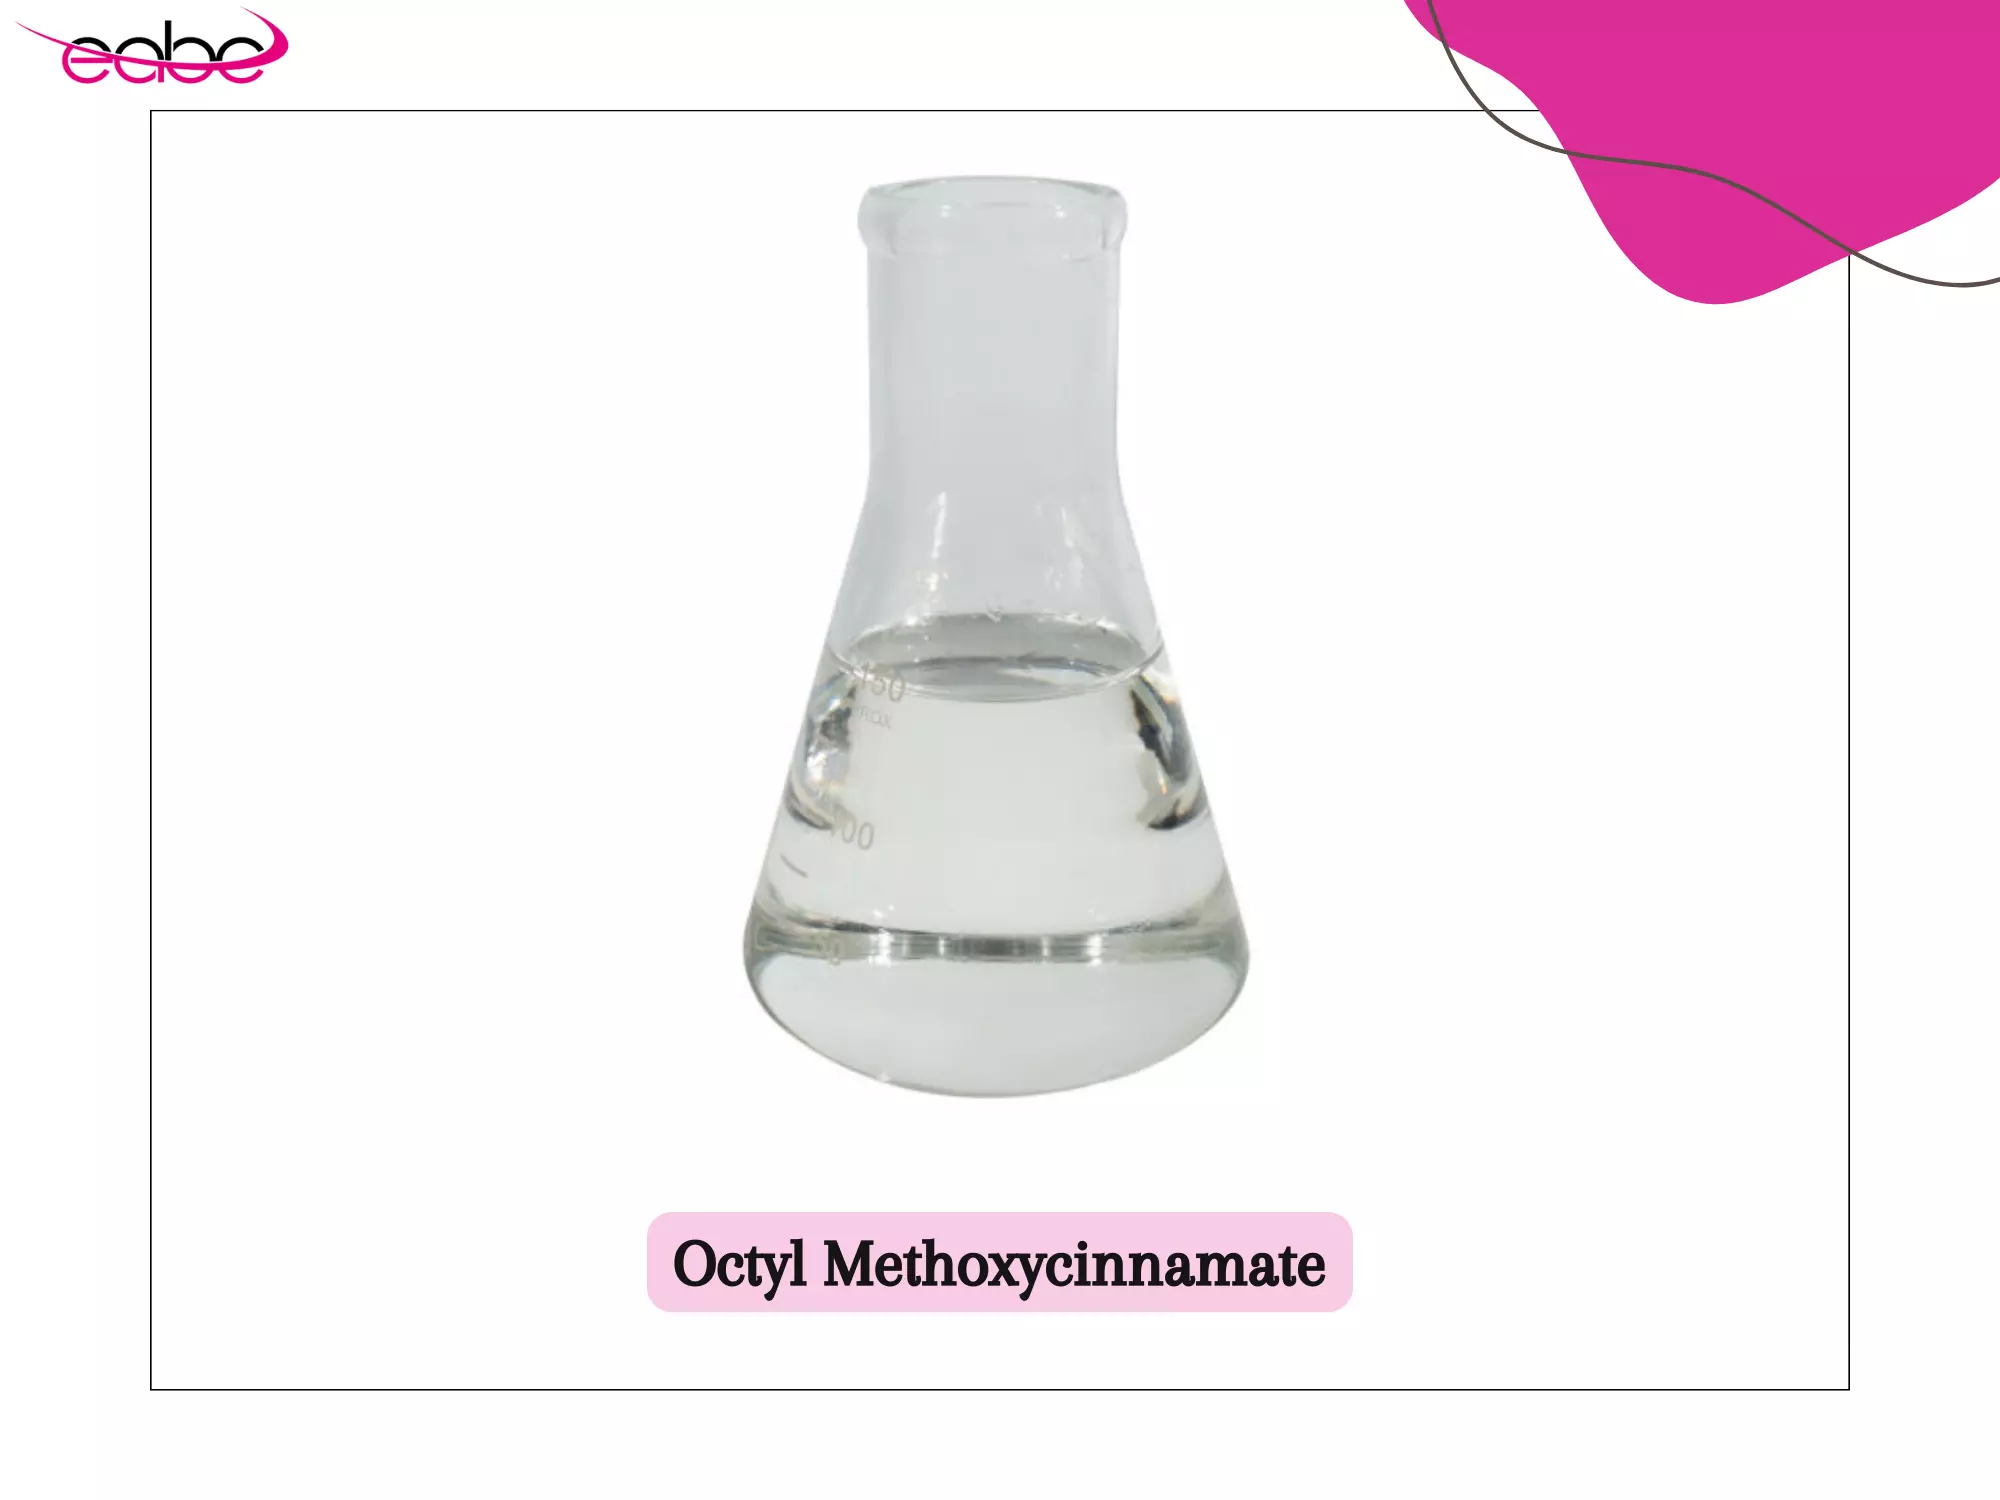 Octyl Methoxycinnamate (OMC)